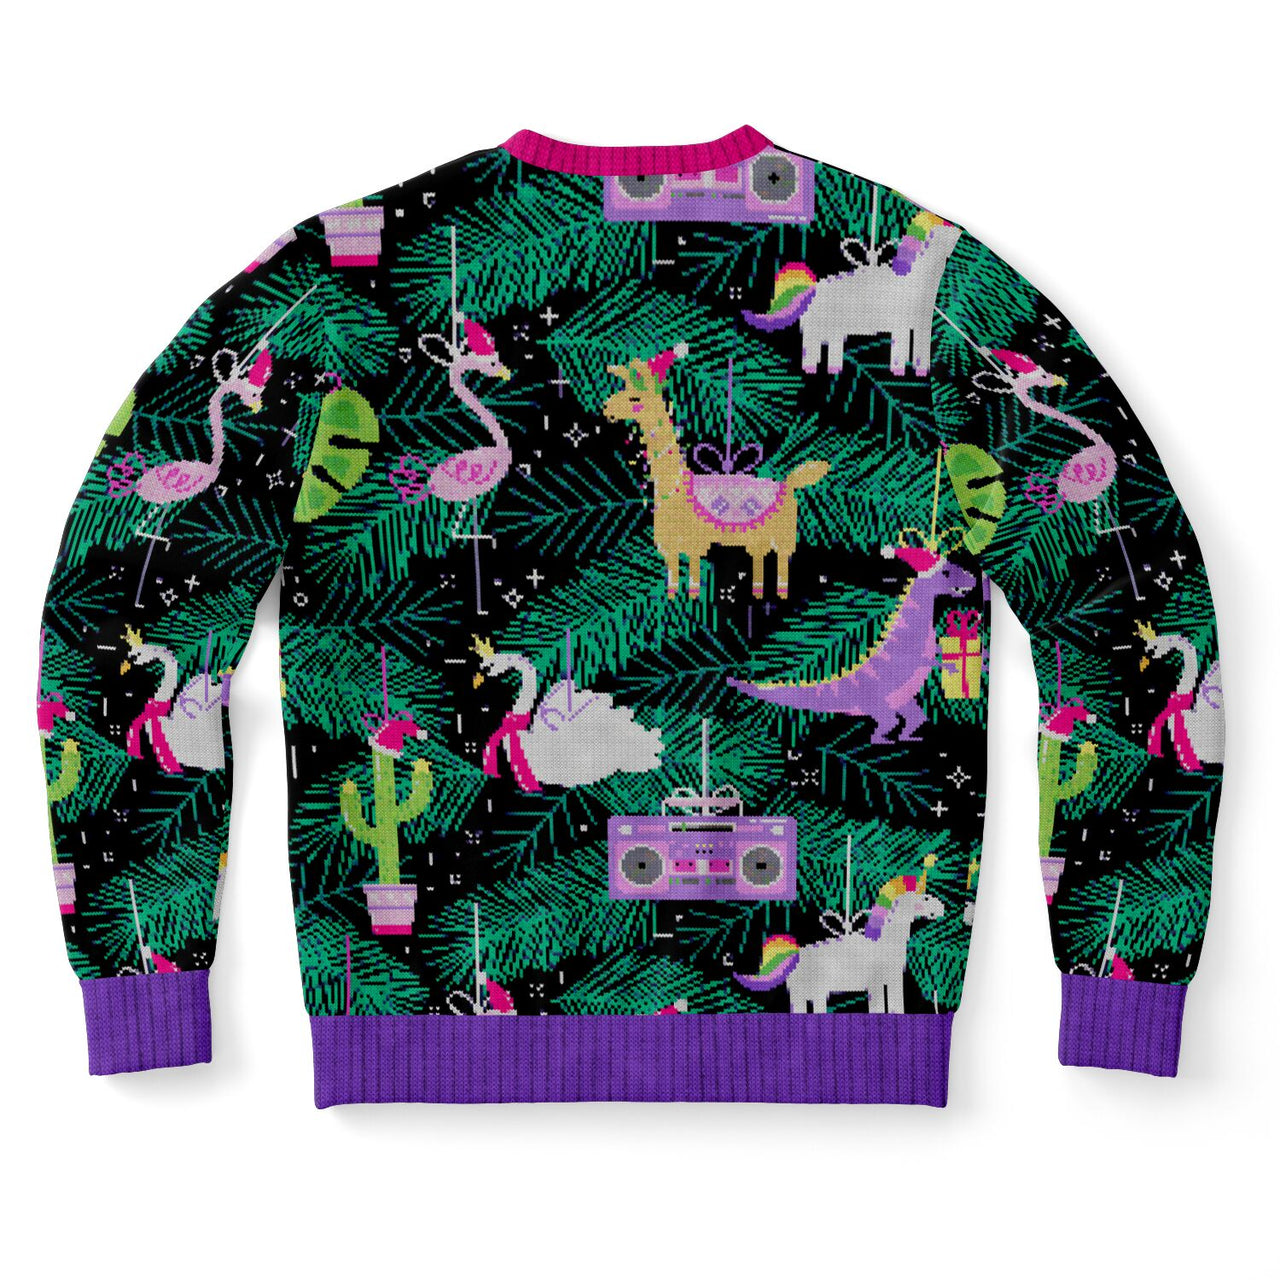 Jingle Balls Ugly Christmas Fashion Sweatshirt - Adult AOP